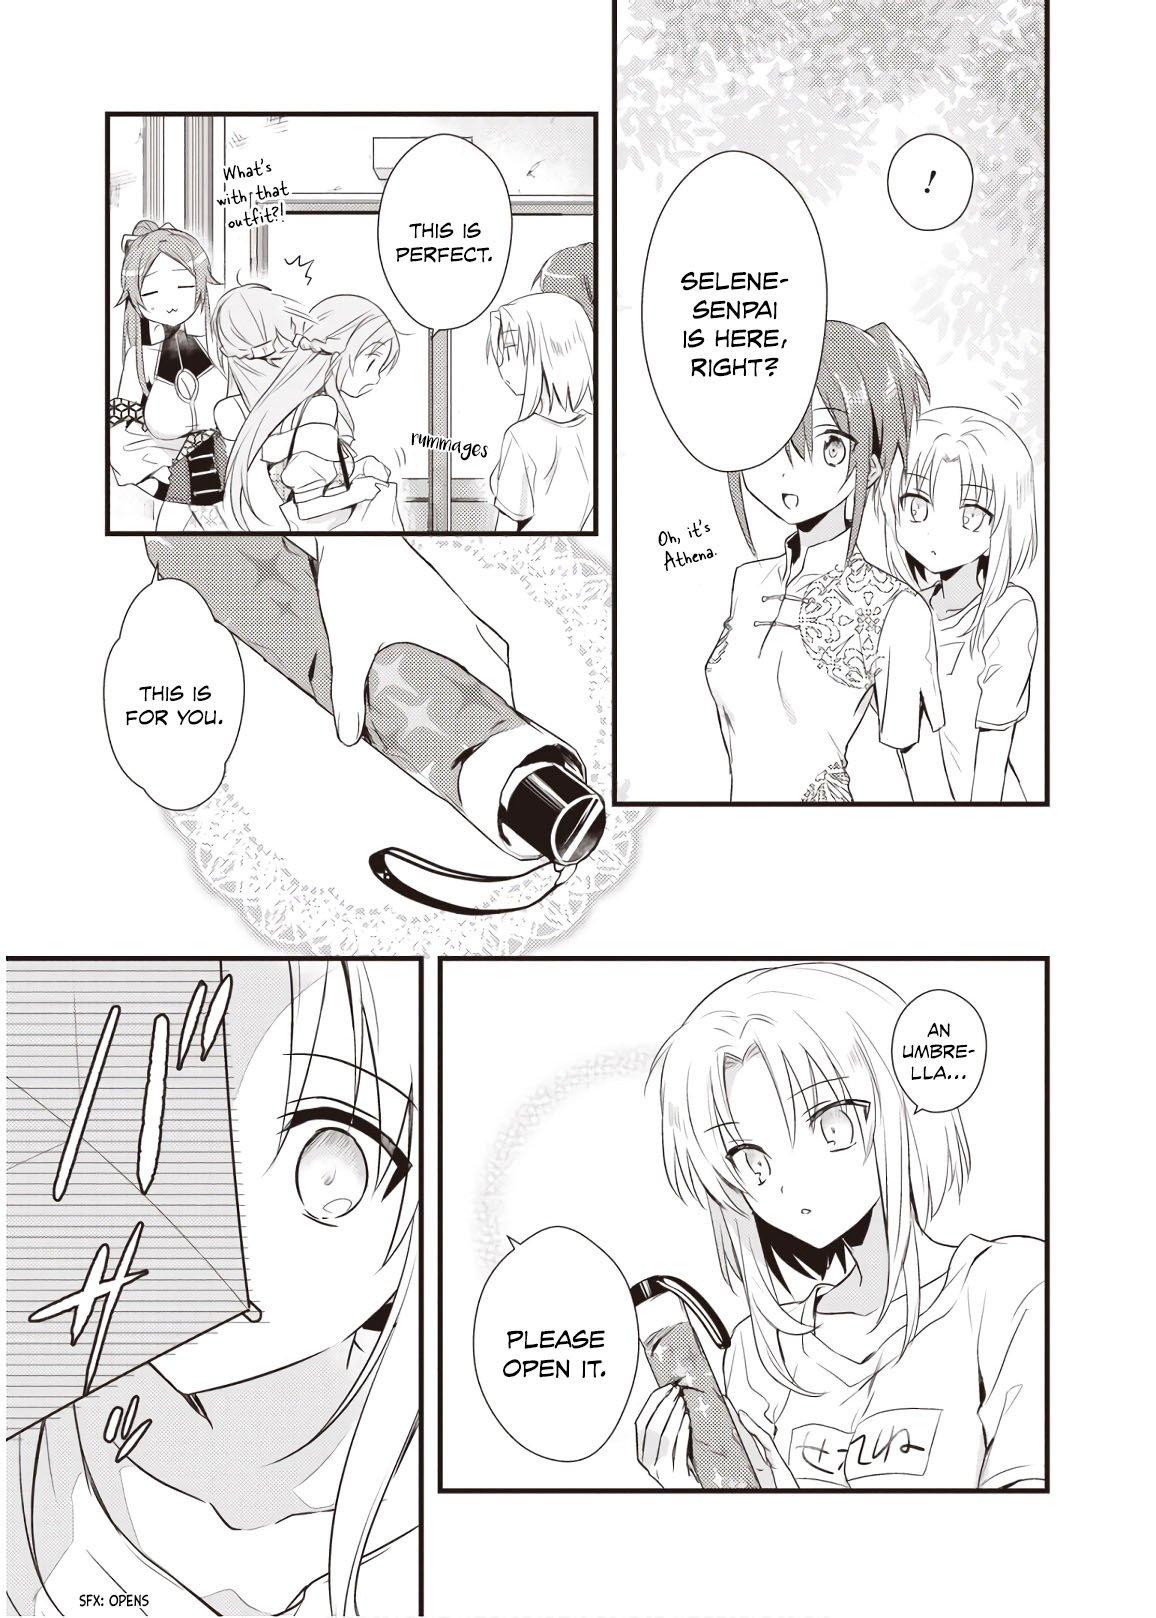 Megami-ryou no Ryoubo-kun. Ch.23 Page 15 - Mangago